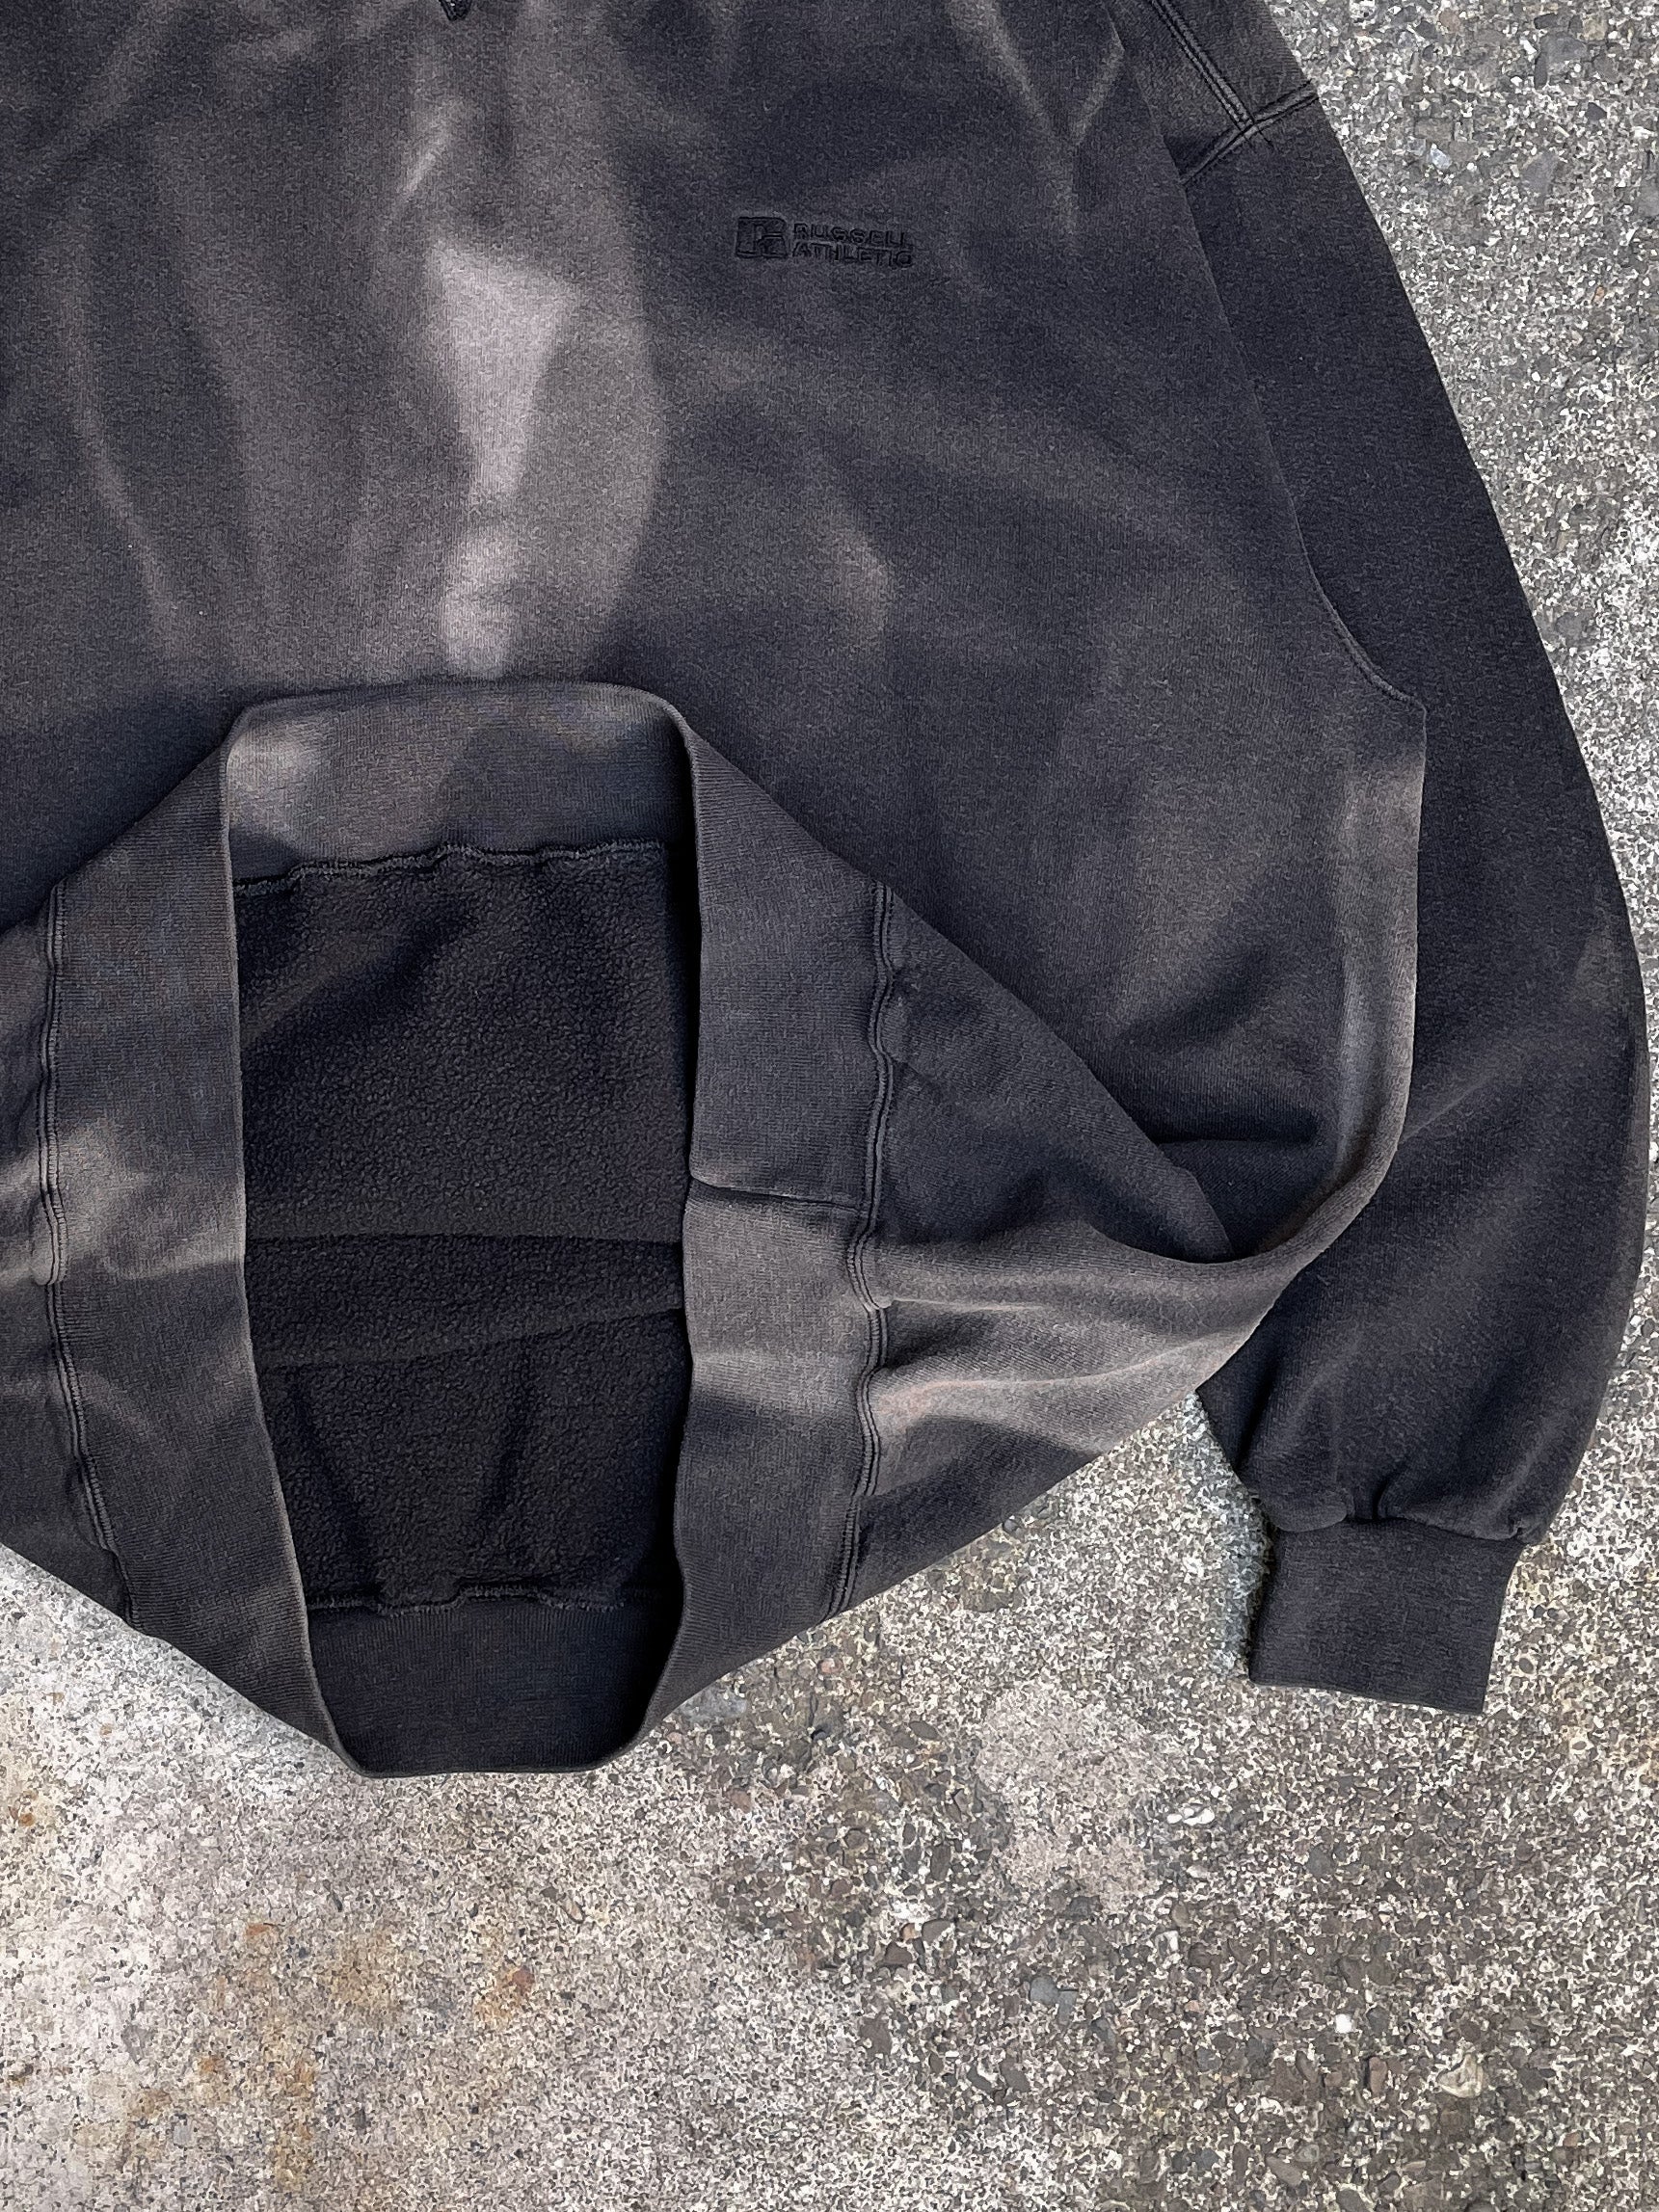 1990s Russell Sun Faded Black High-Cotton Sweatshirt (XL)